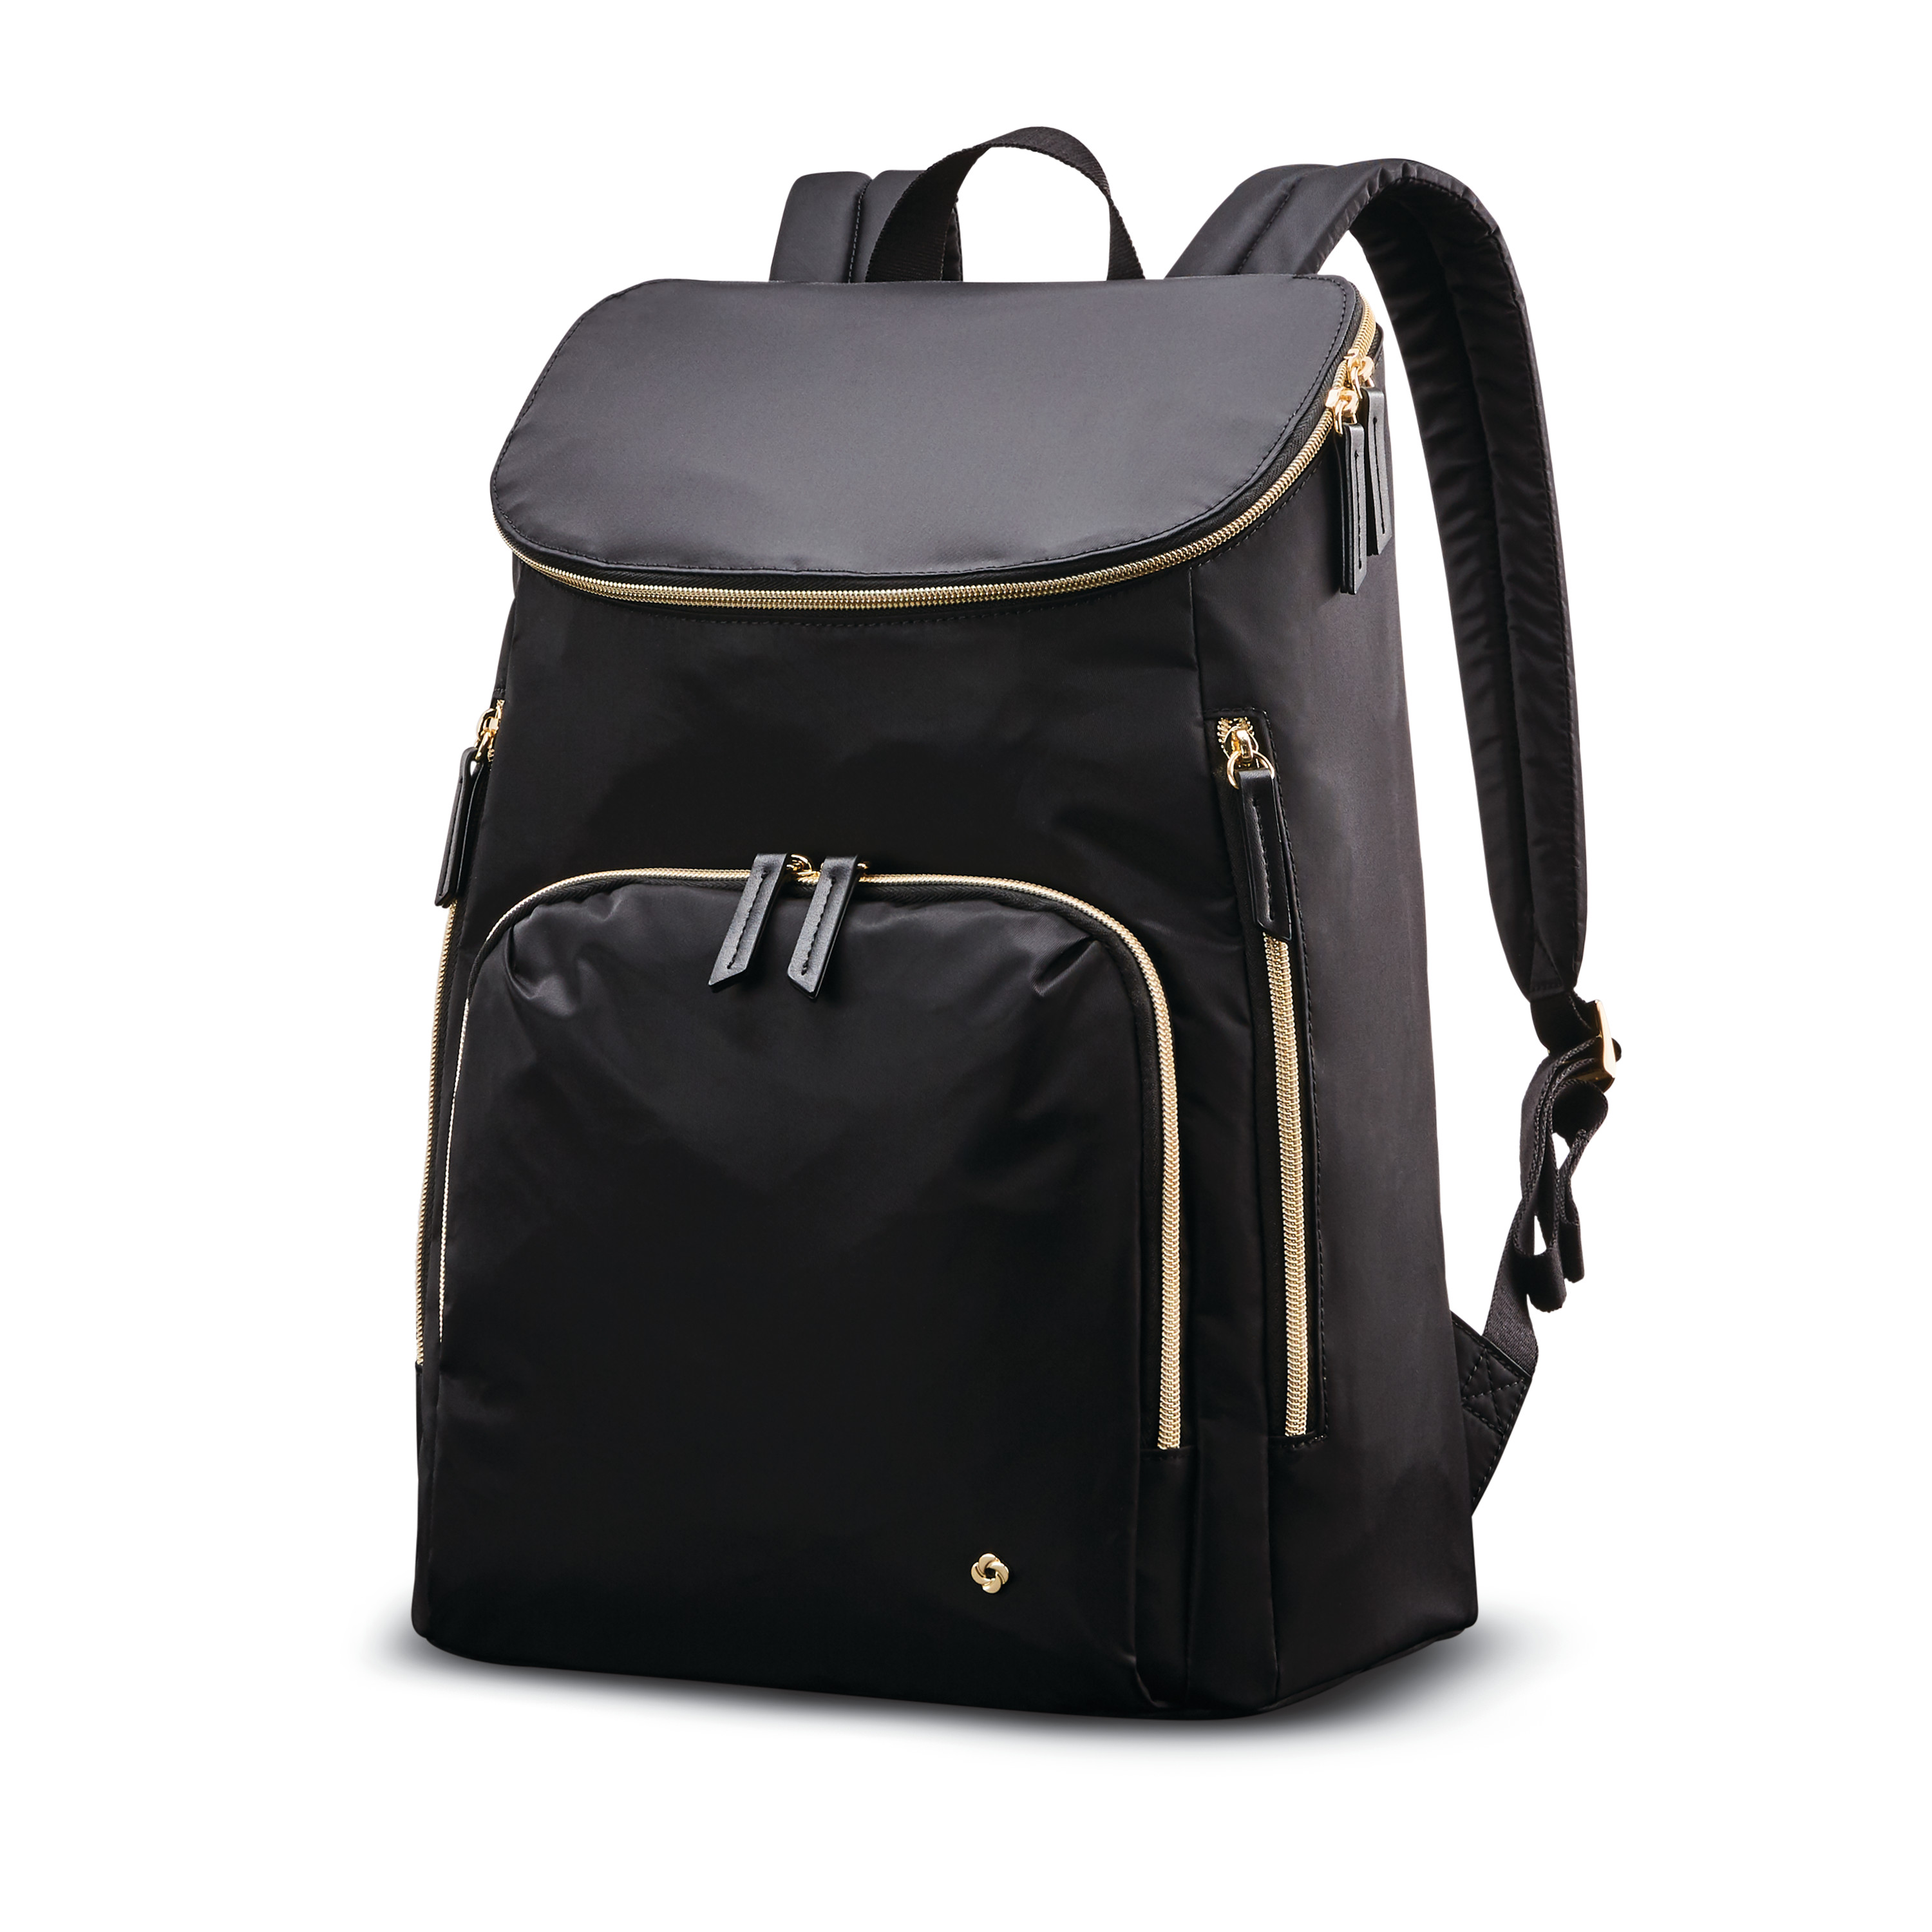 Buy Mobile Solution Deluxe Backpack for USD 79.99 | Samsonite US